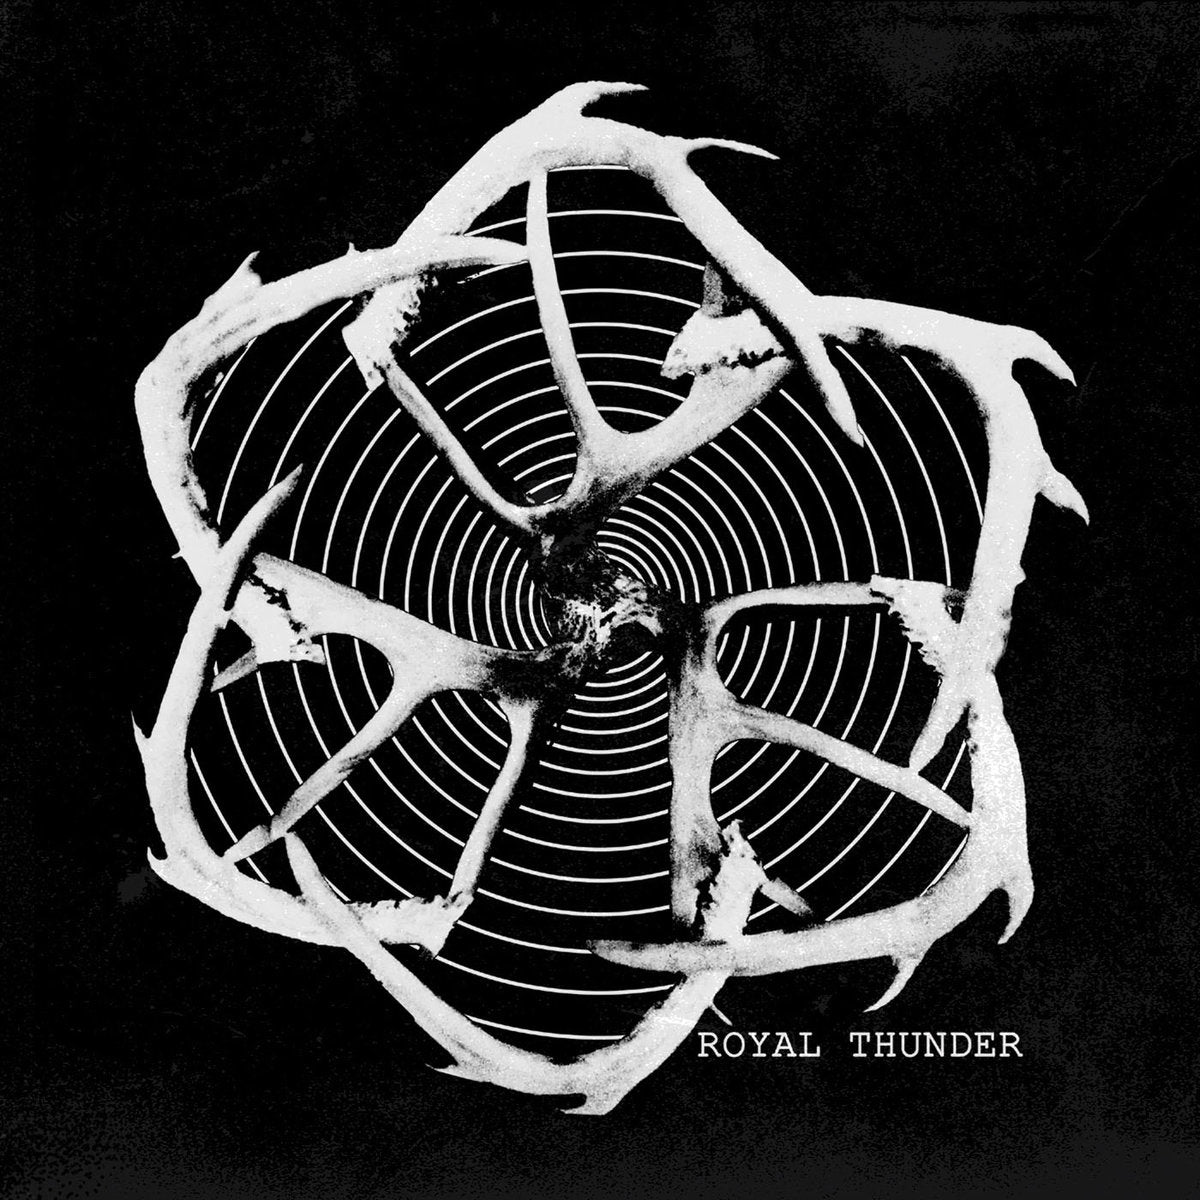 ROYAL THUNDER "Royal Thunder" LP